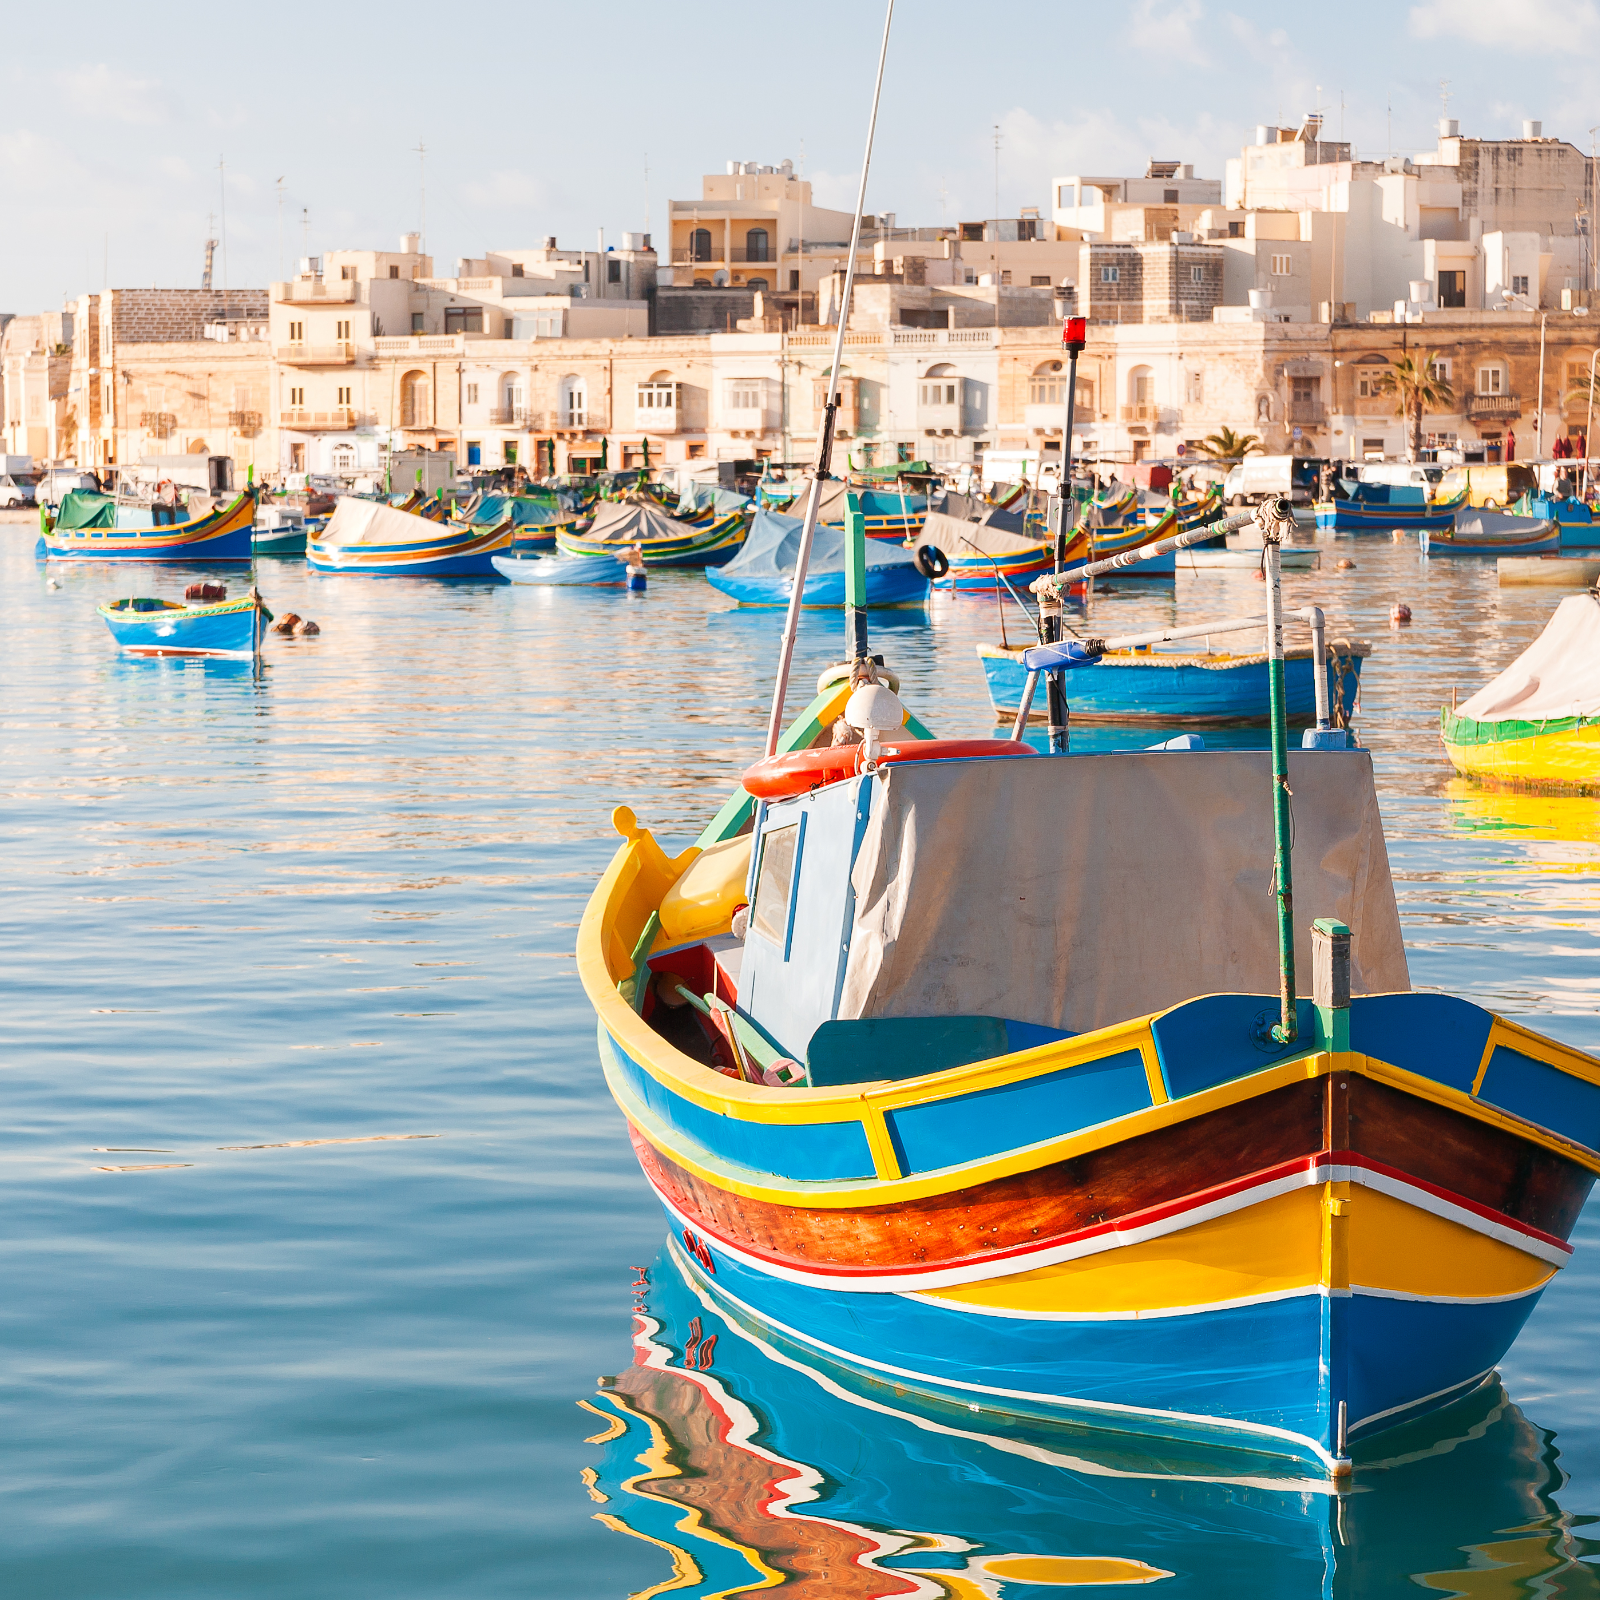 Bittrex to Launch Crypto Exchange in Malta Next Month